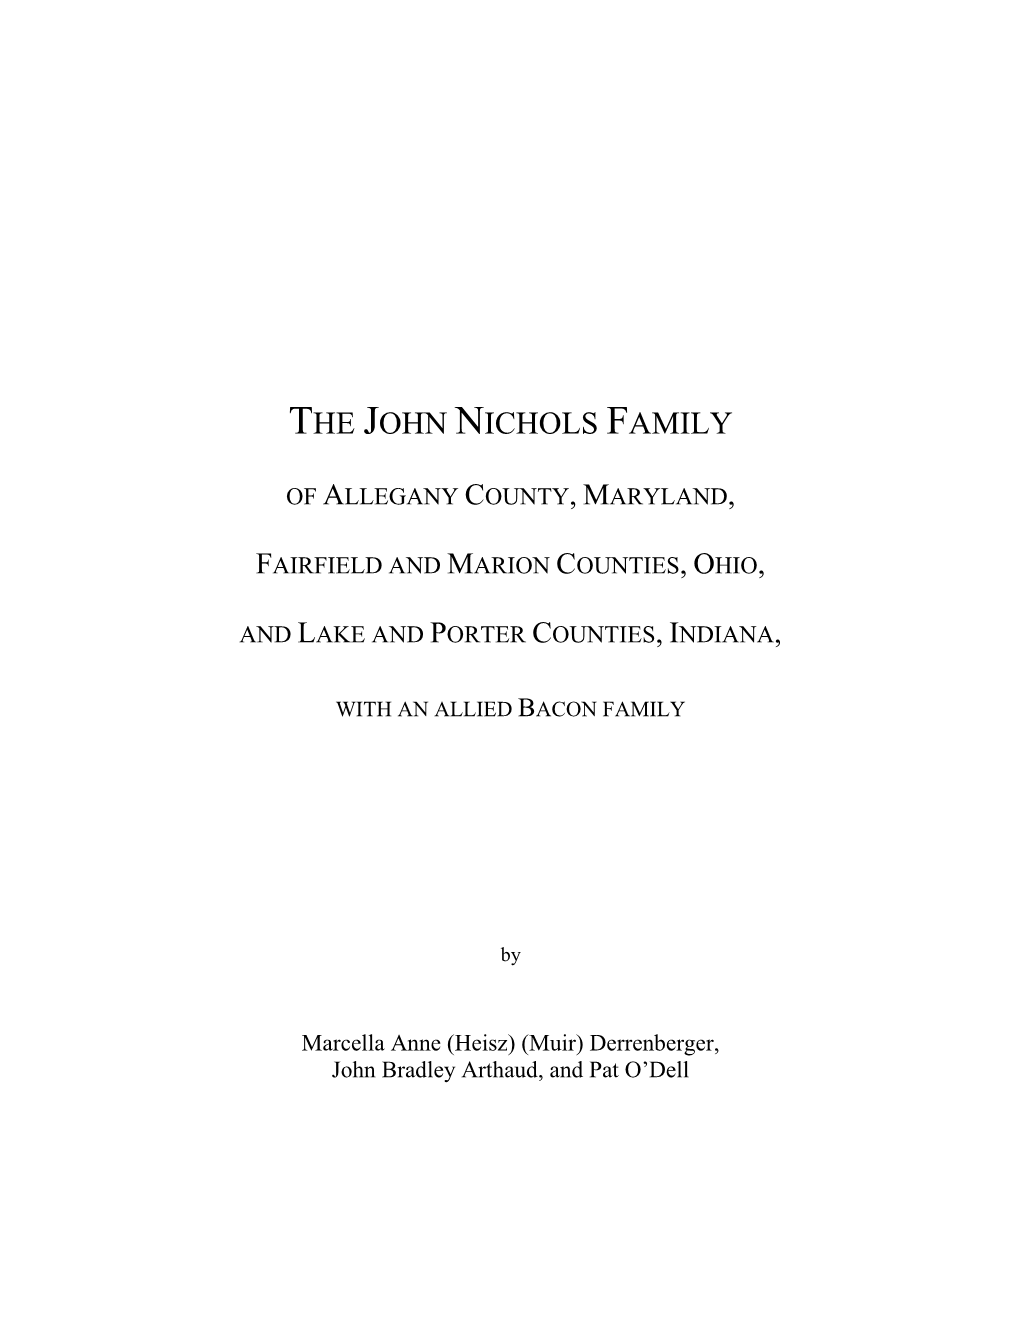 John Nichols Family of Allegany County, Maryland, Fairfield And